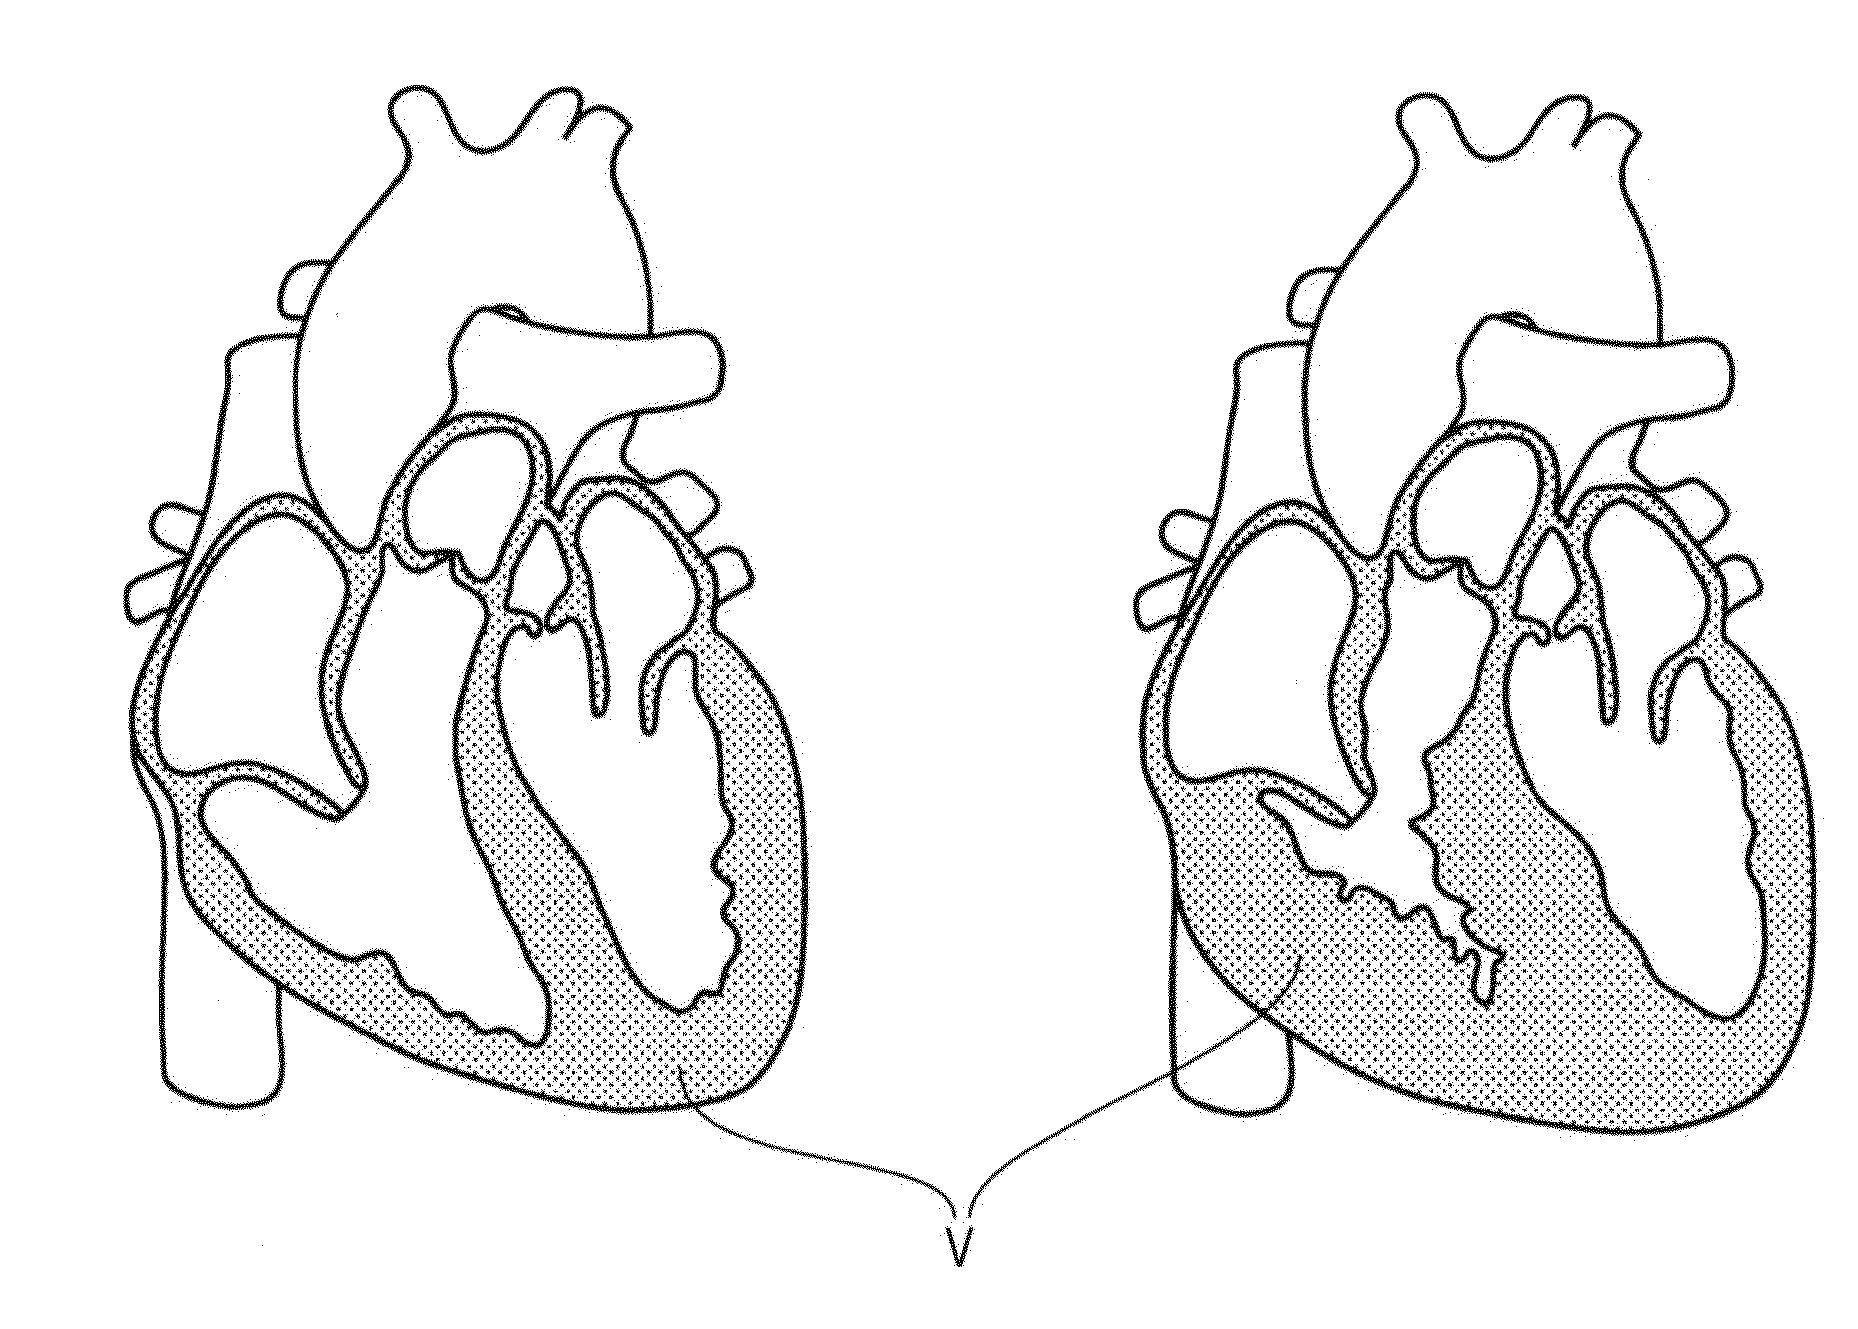 Volume rendering of medical images